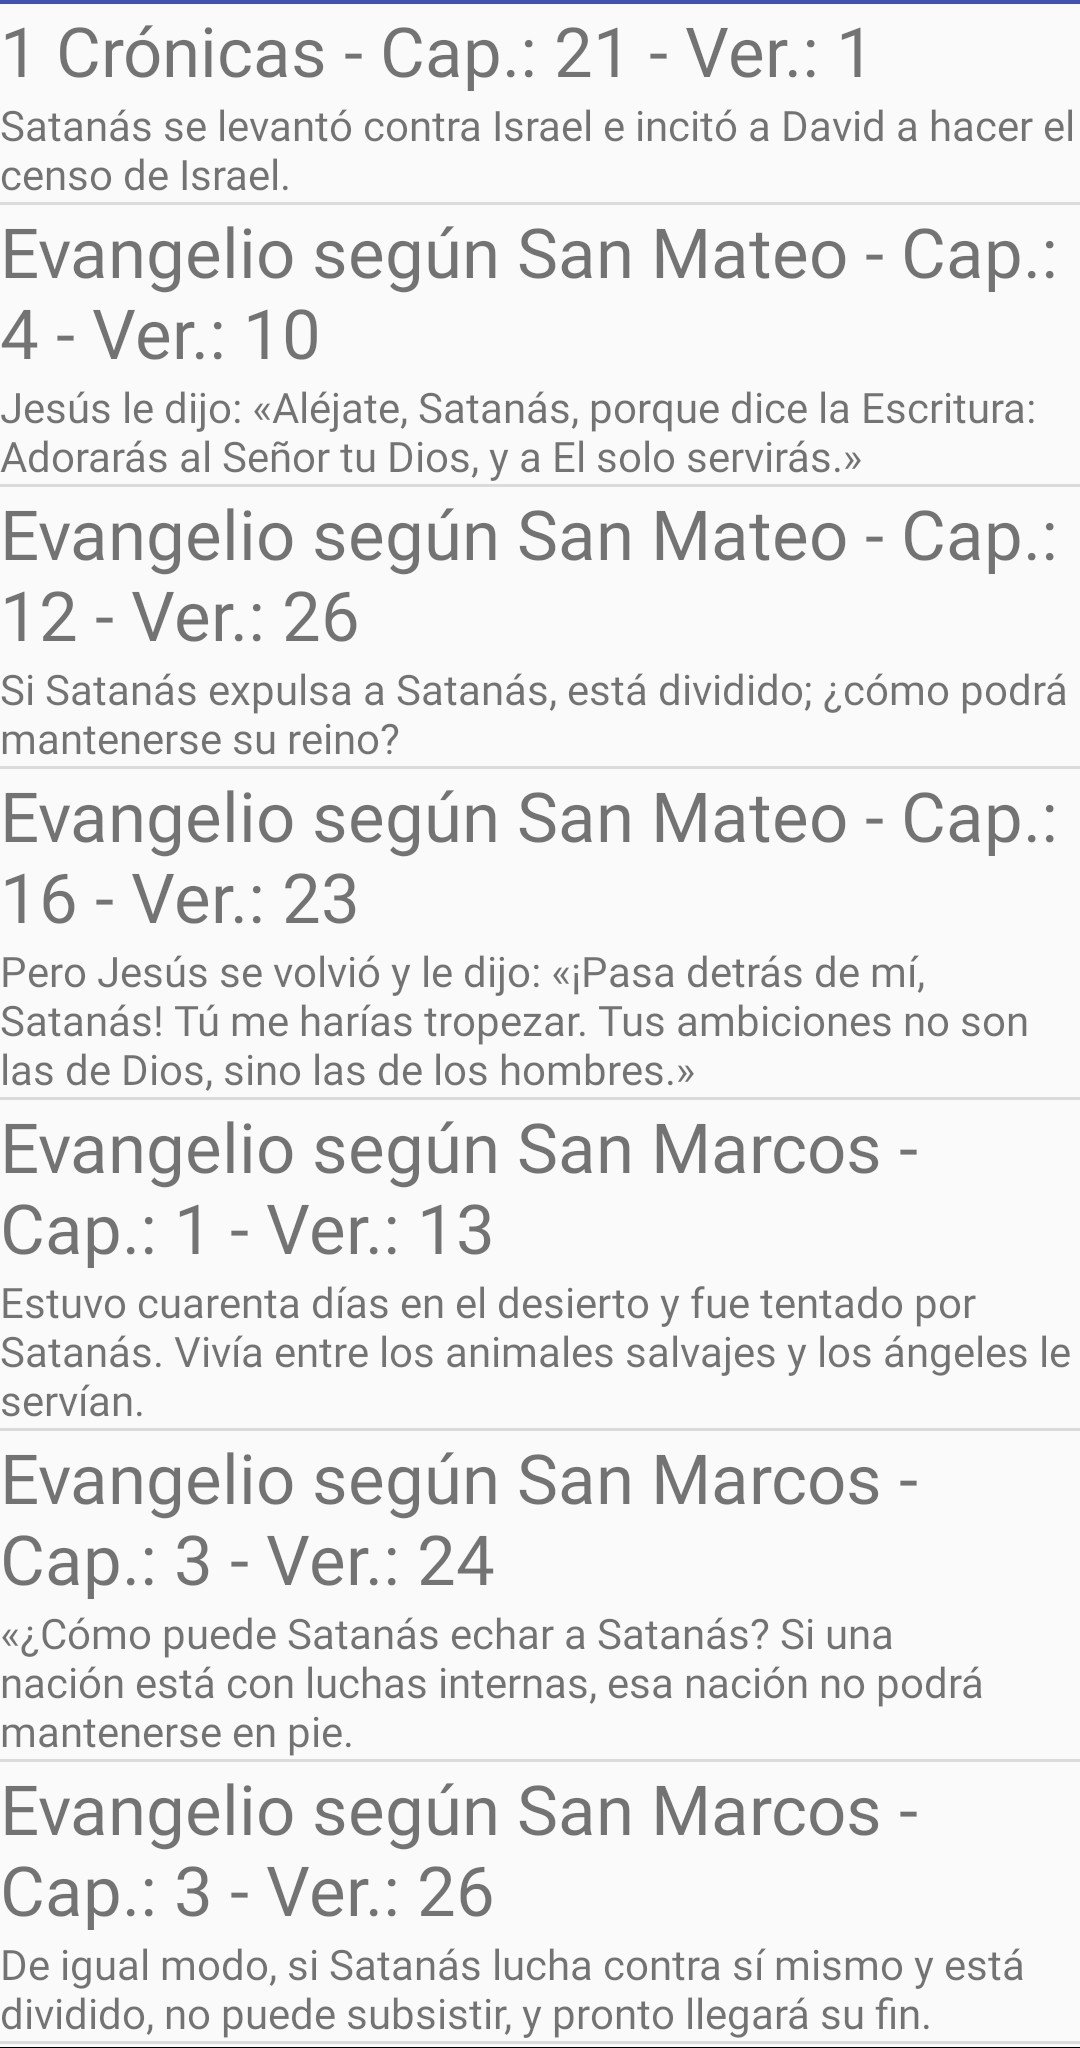 la biblia catolica latinoamericana app